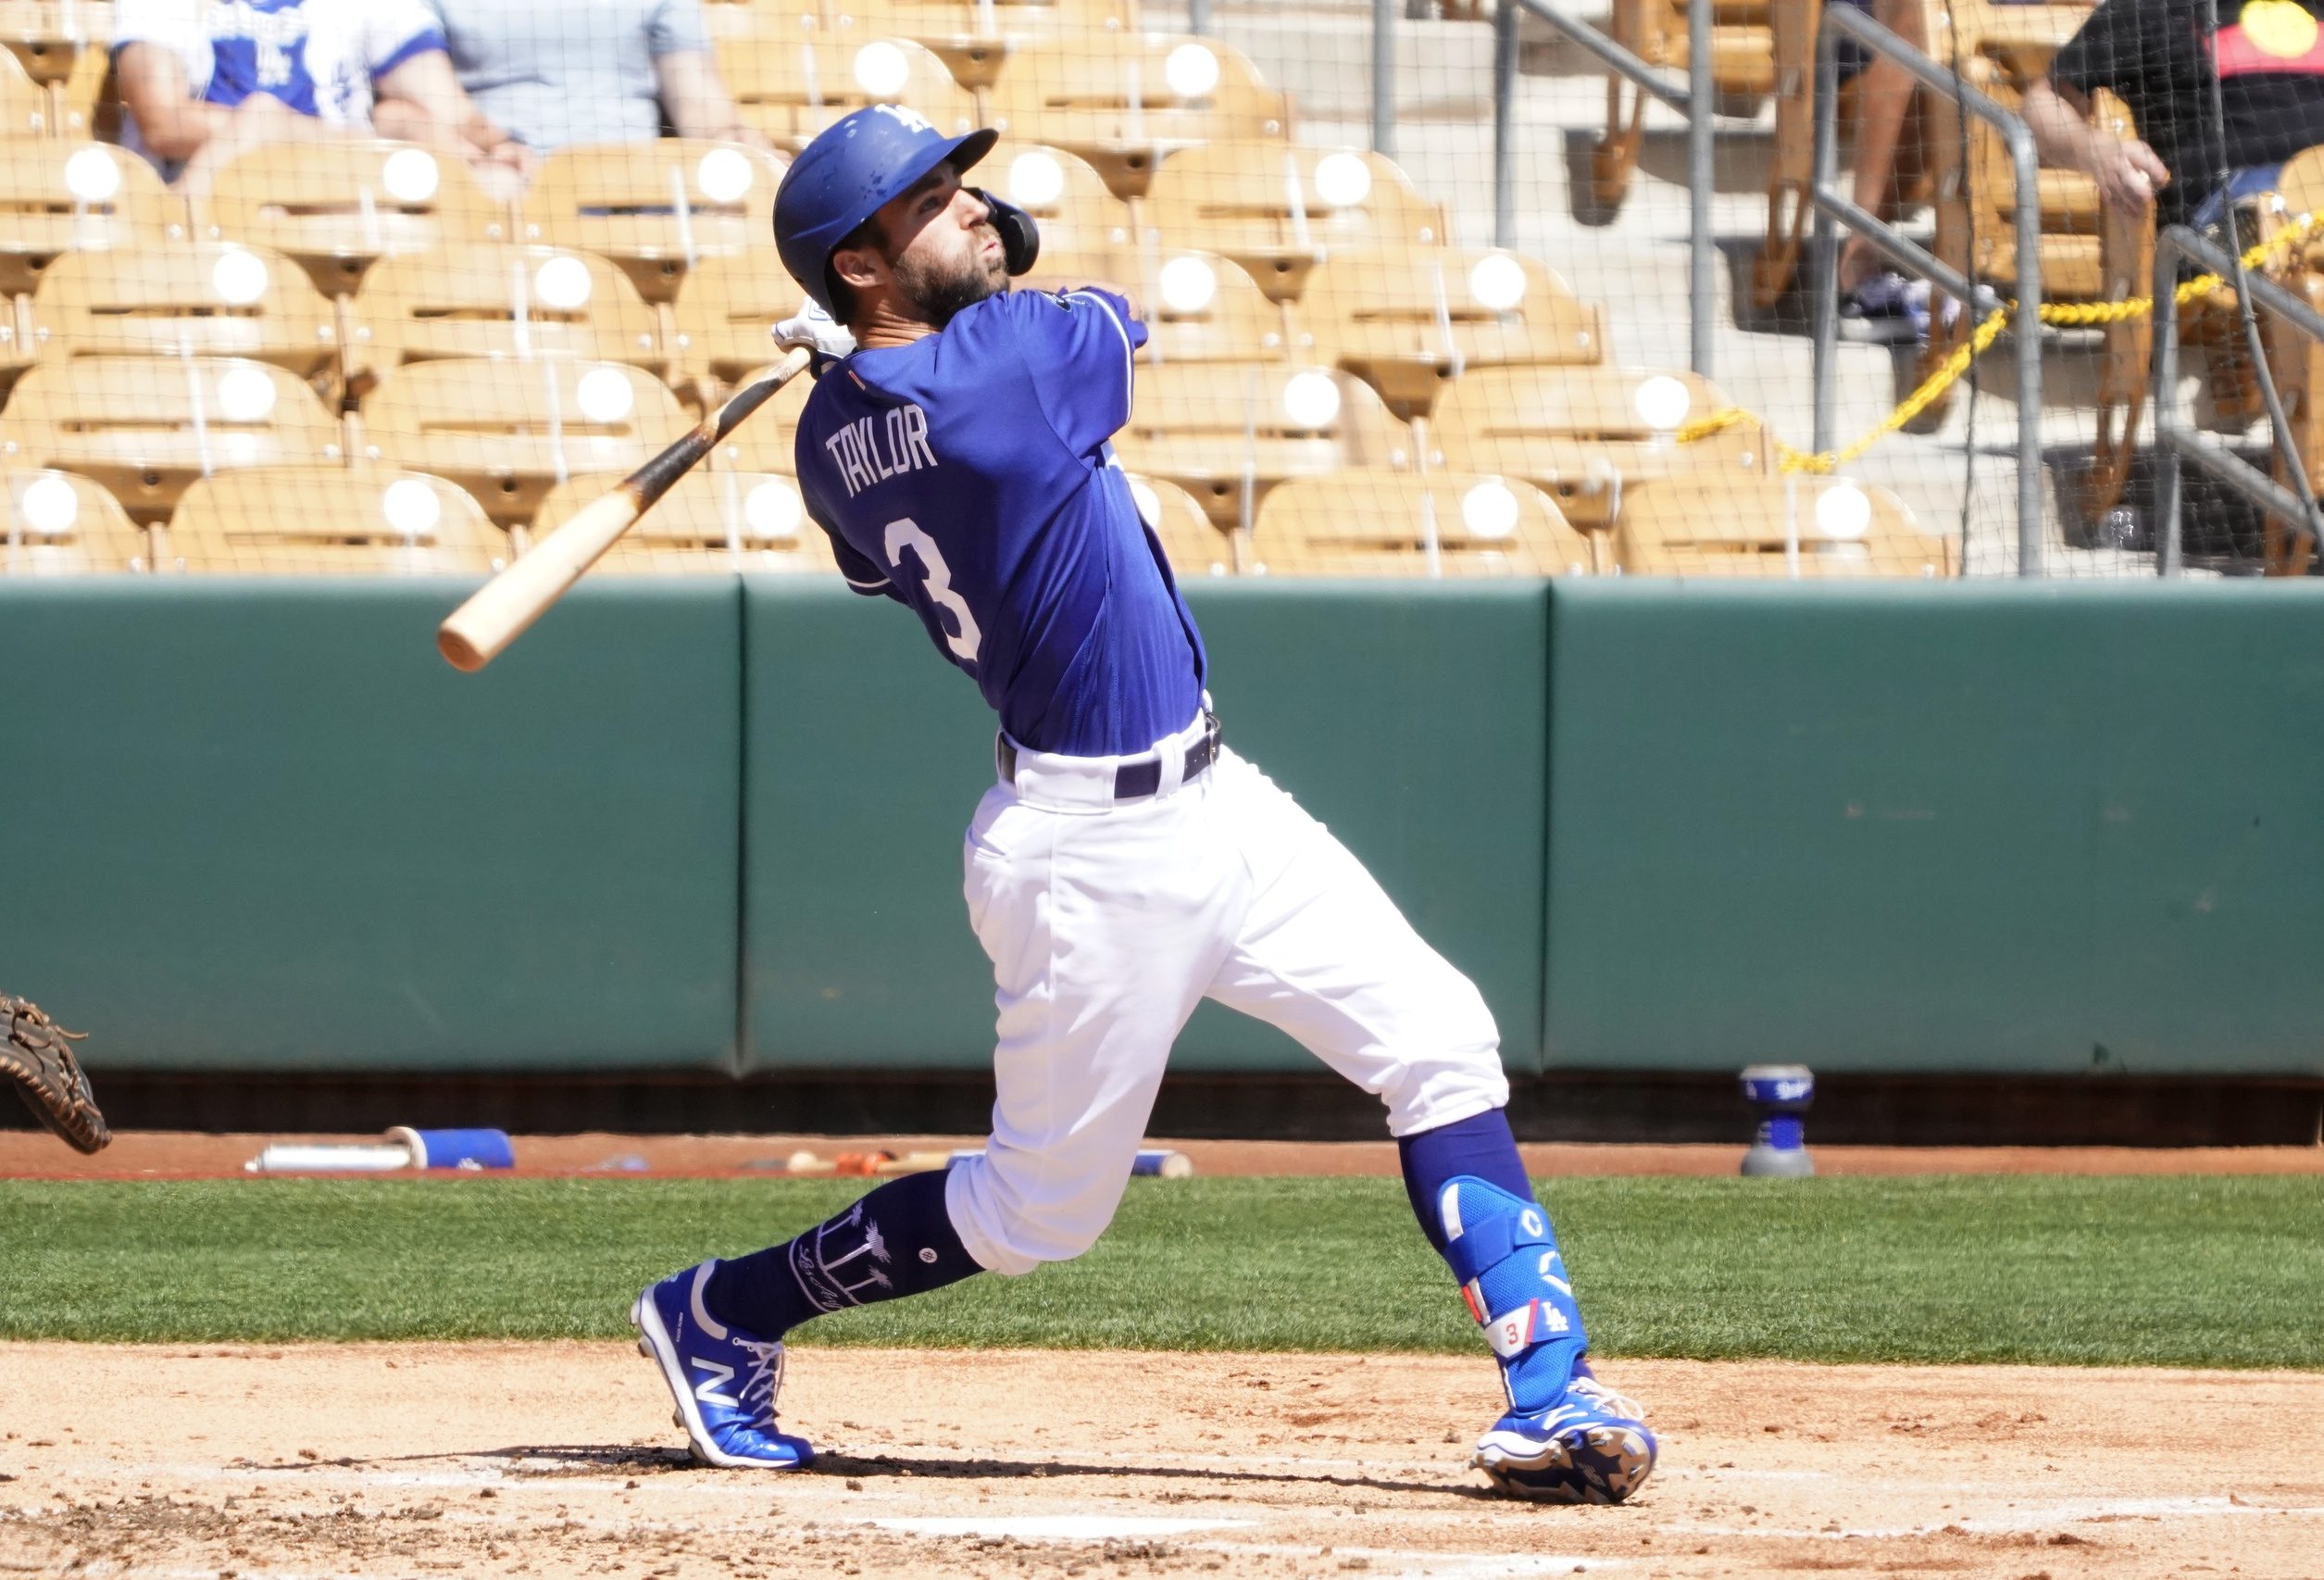 Dodgers' Chris Taylor reveals he had offseason elbow surgery - Los